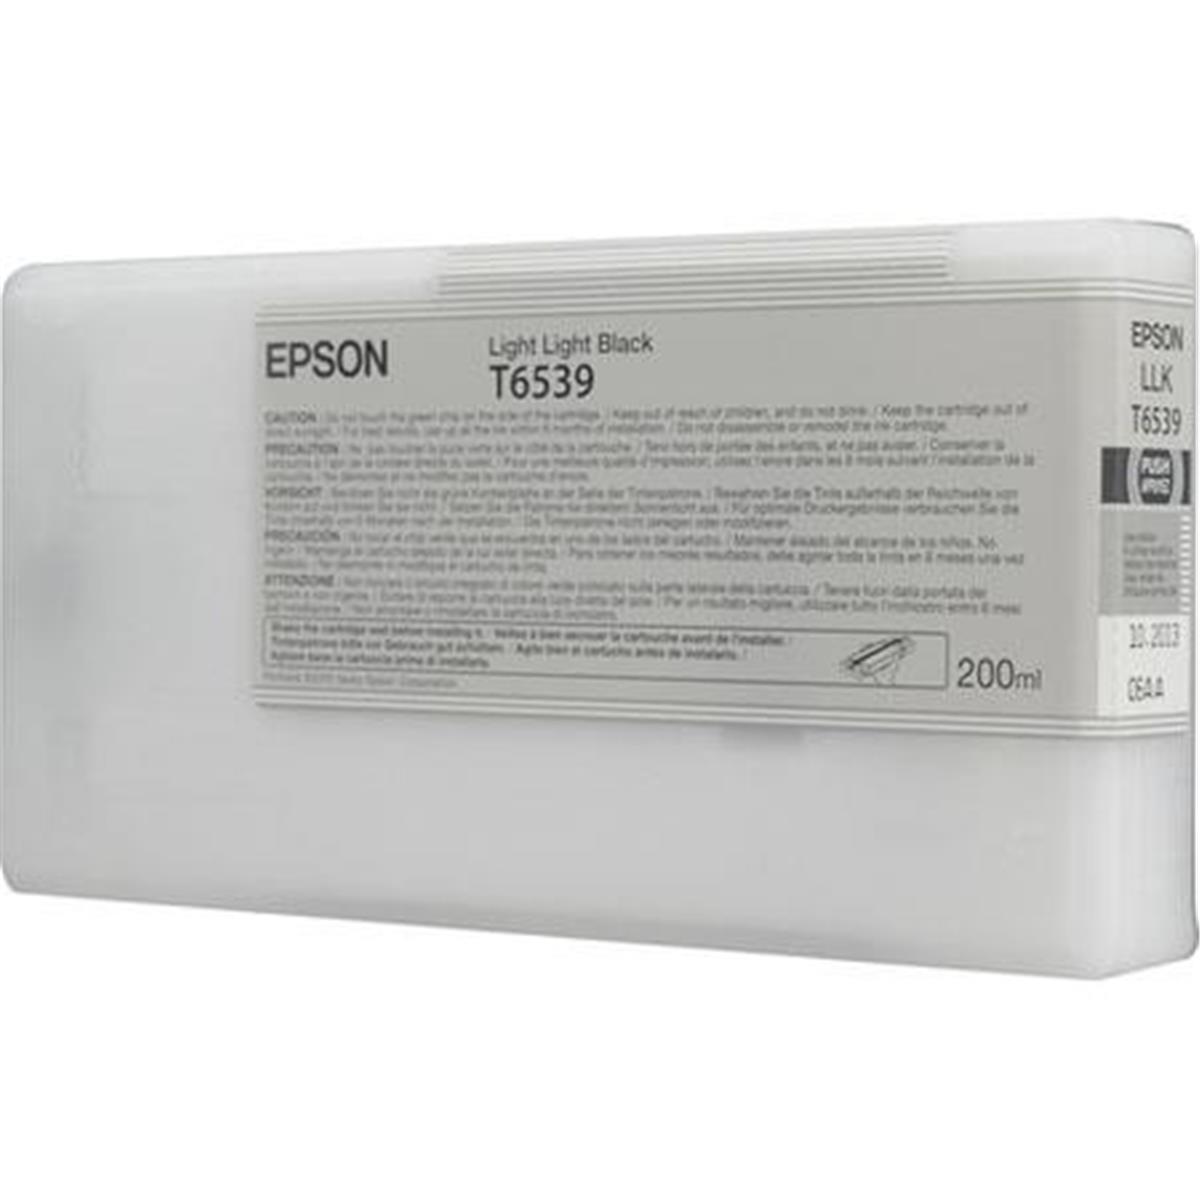 Epson EPST653900 Stylus Pro 4900 Standard Yield Ink Cartridge - Light Black